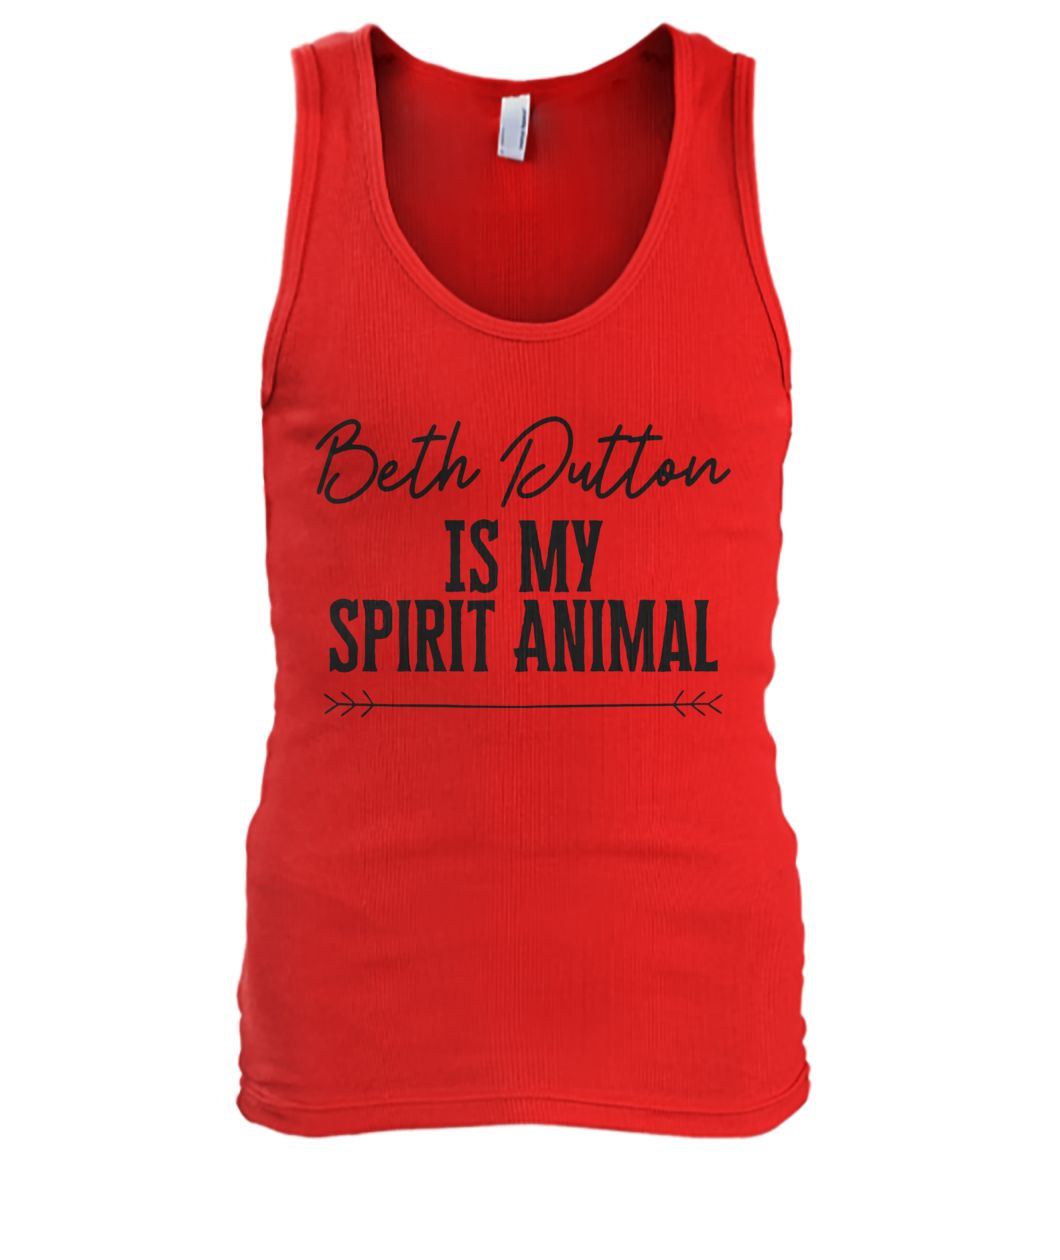 Beth dutton is my spirit animal men's tank top